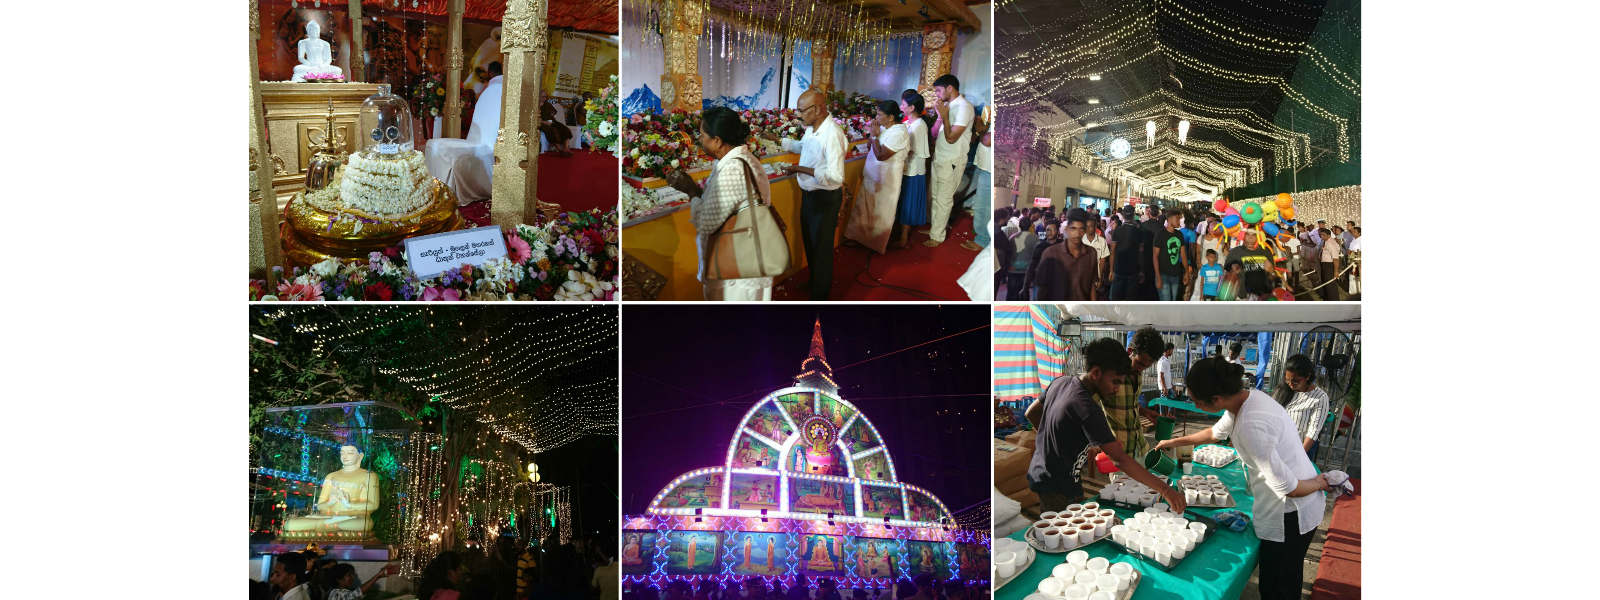 Vesak Zone: Day 2 attracts thousands of devotees